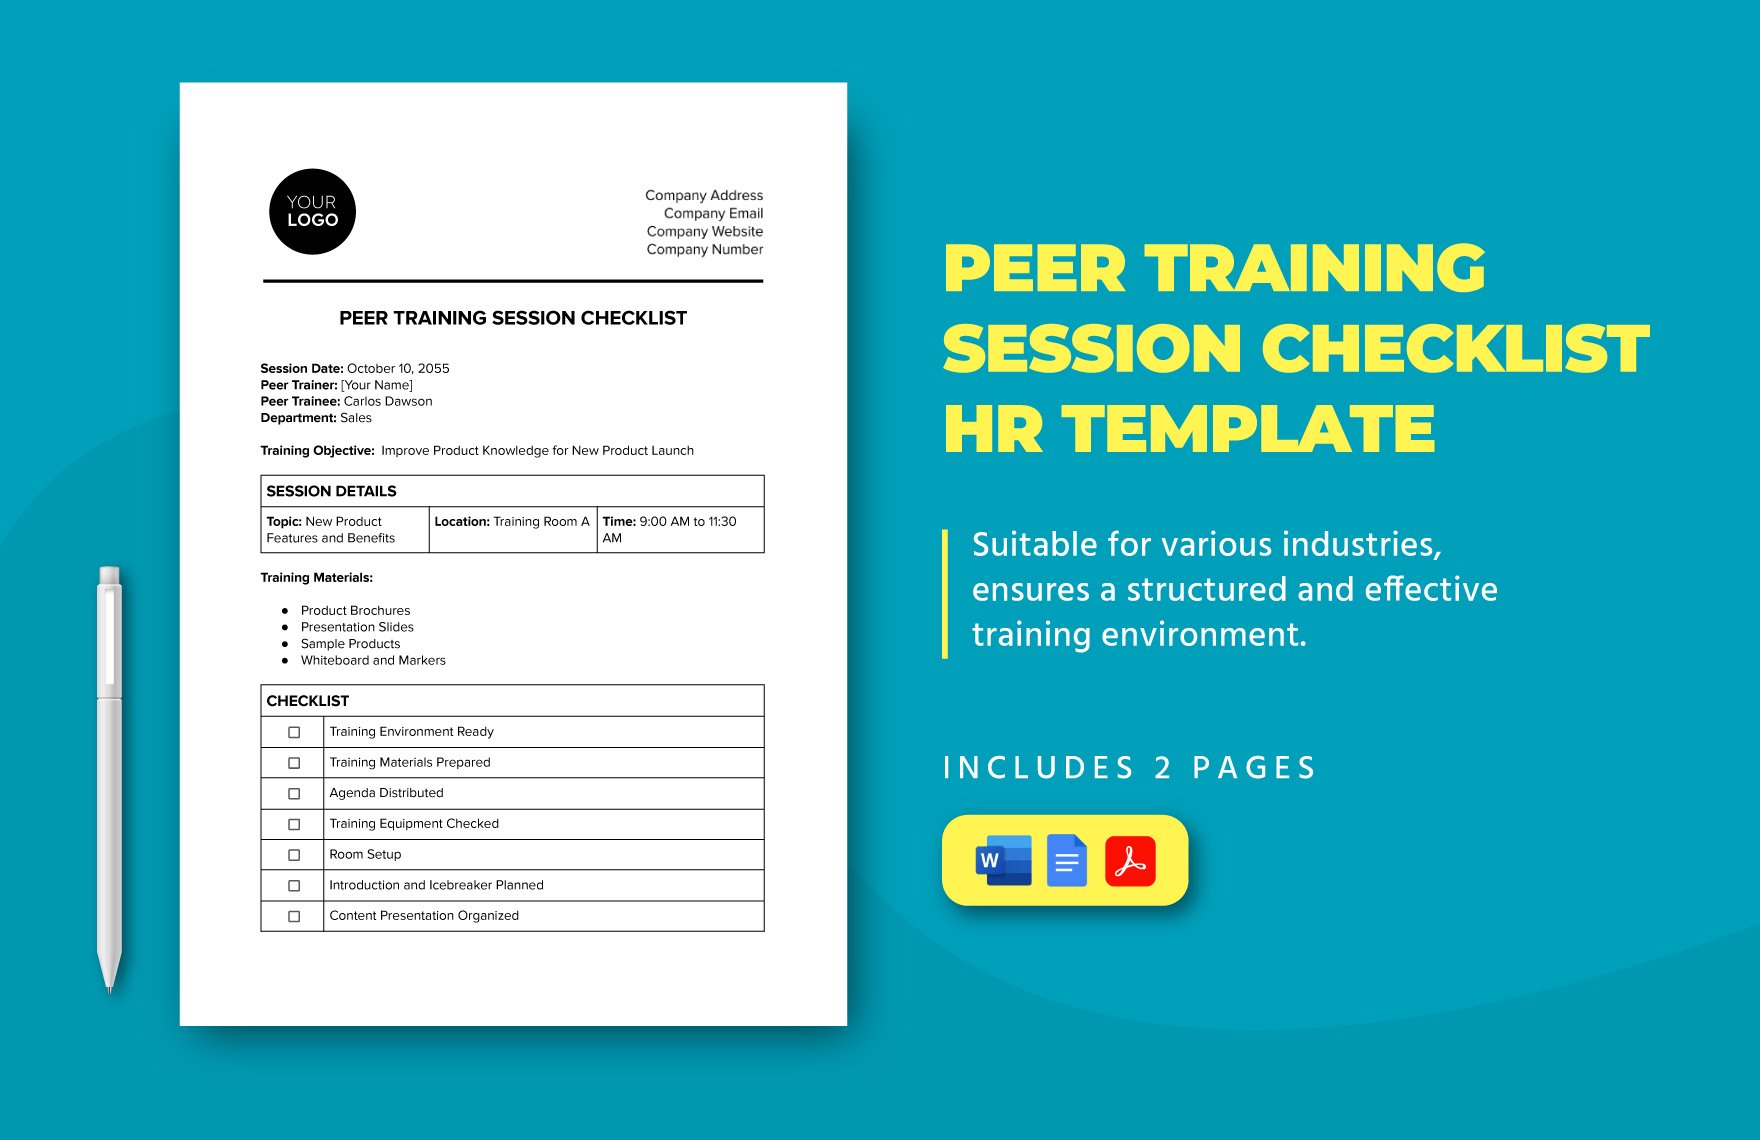 Peer Training Session Checklist HR Template